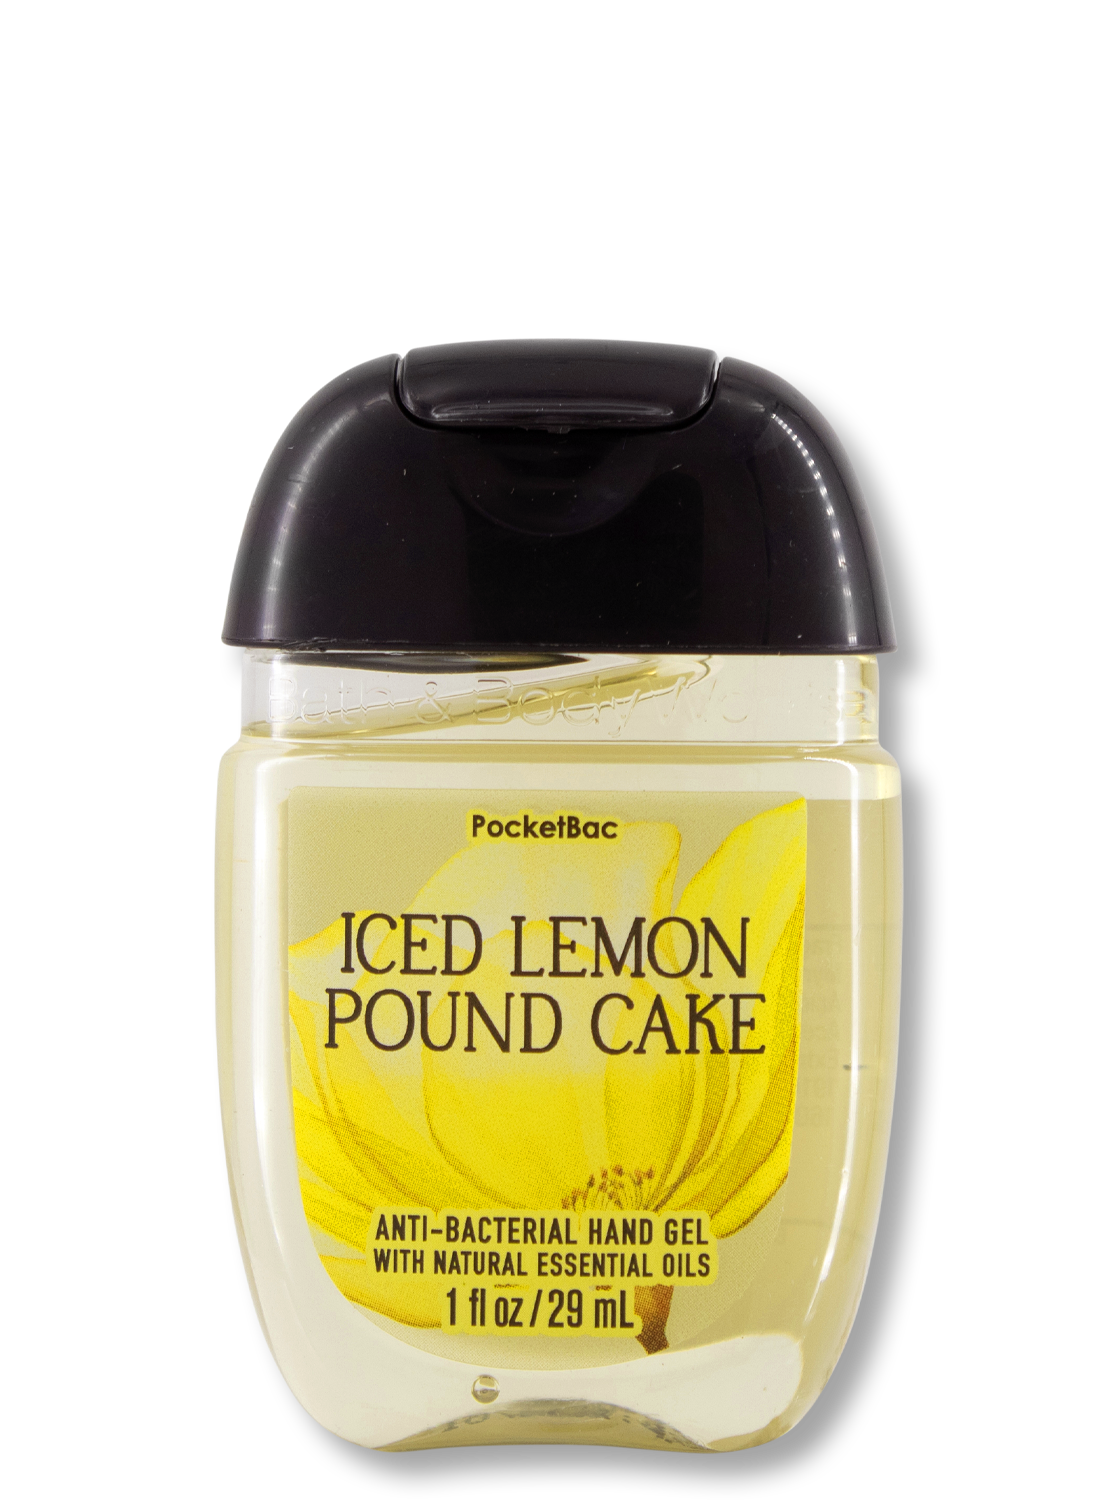 Hand-Desinfektionsgel - Iced Lemon Pound Cake - 29ml